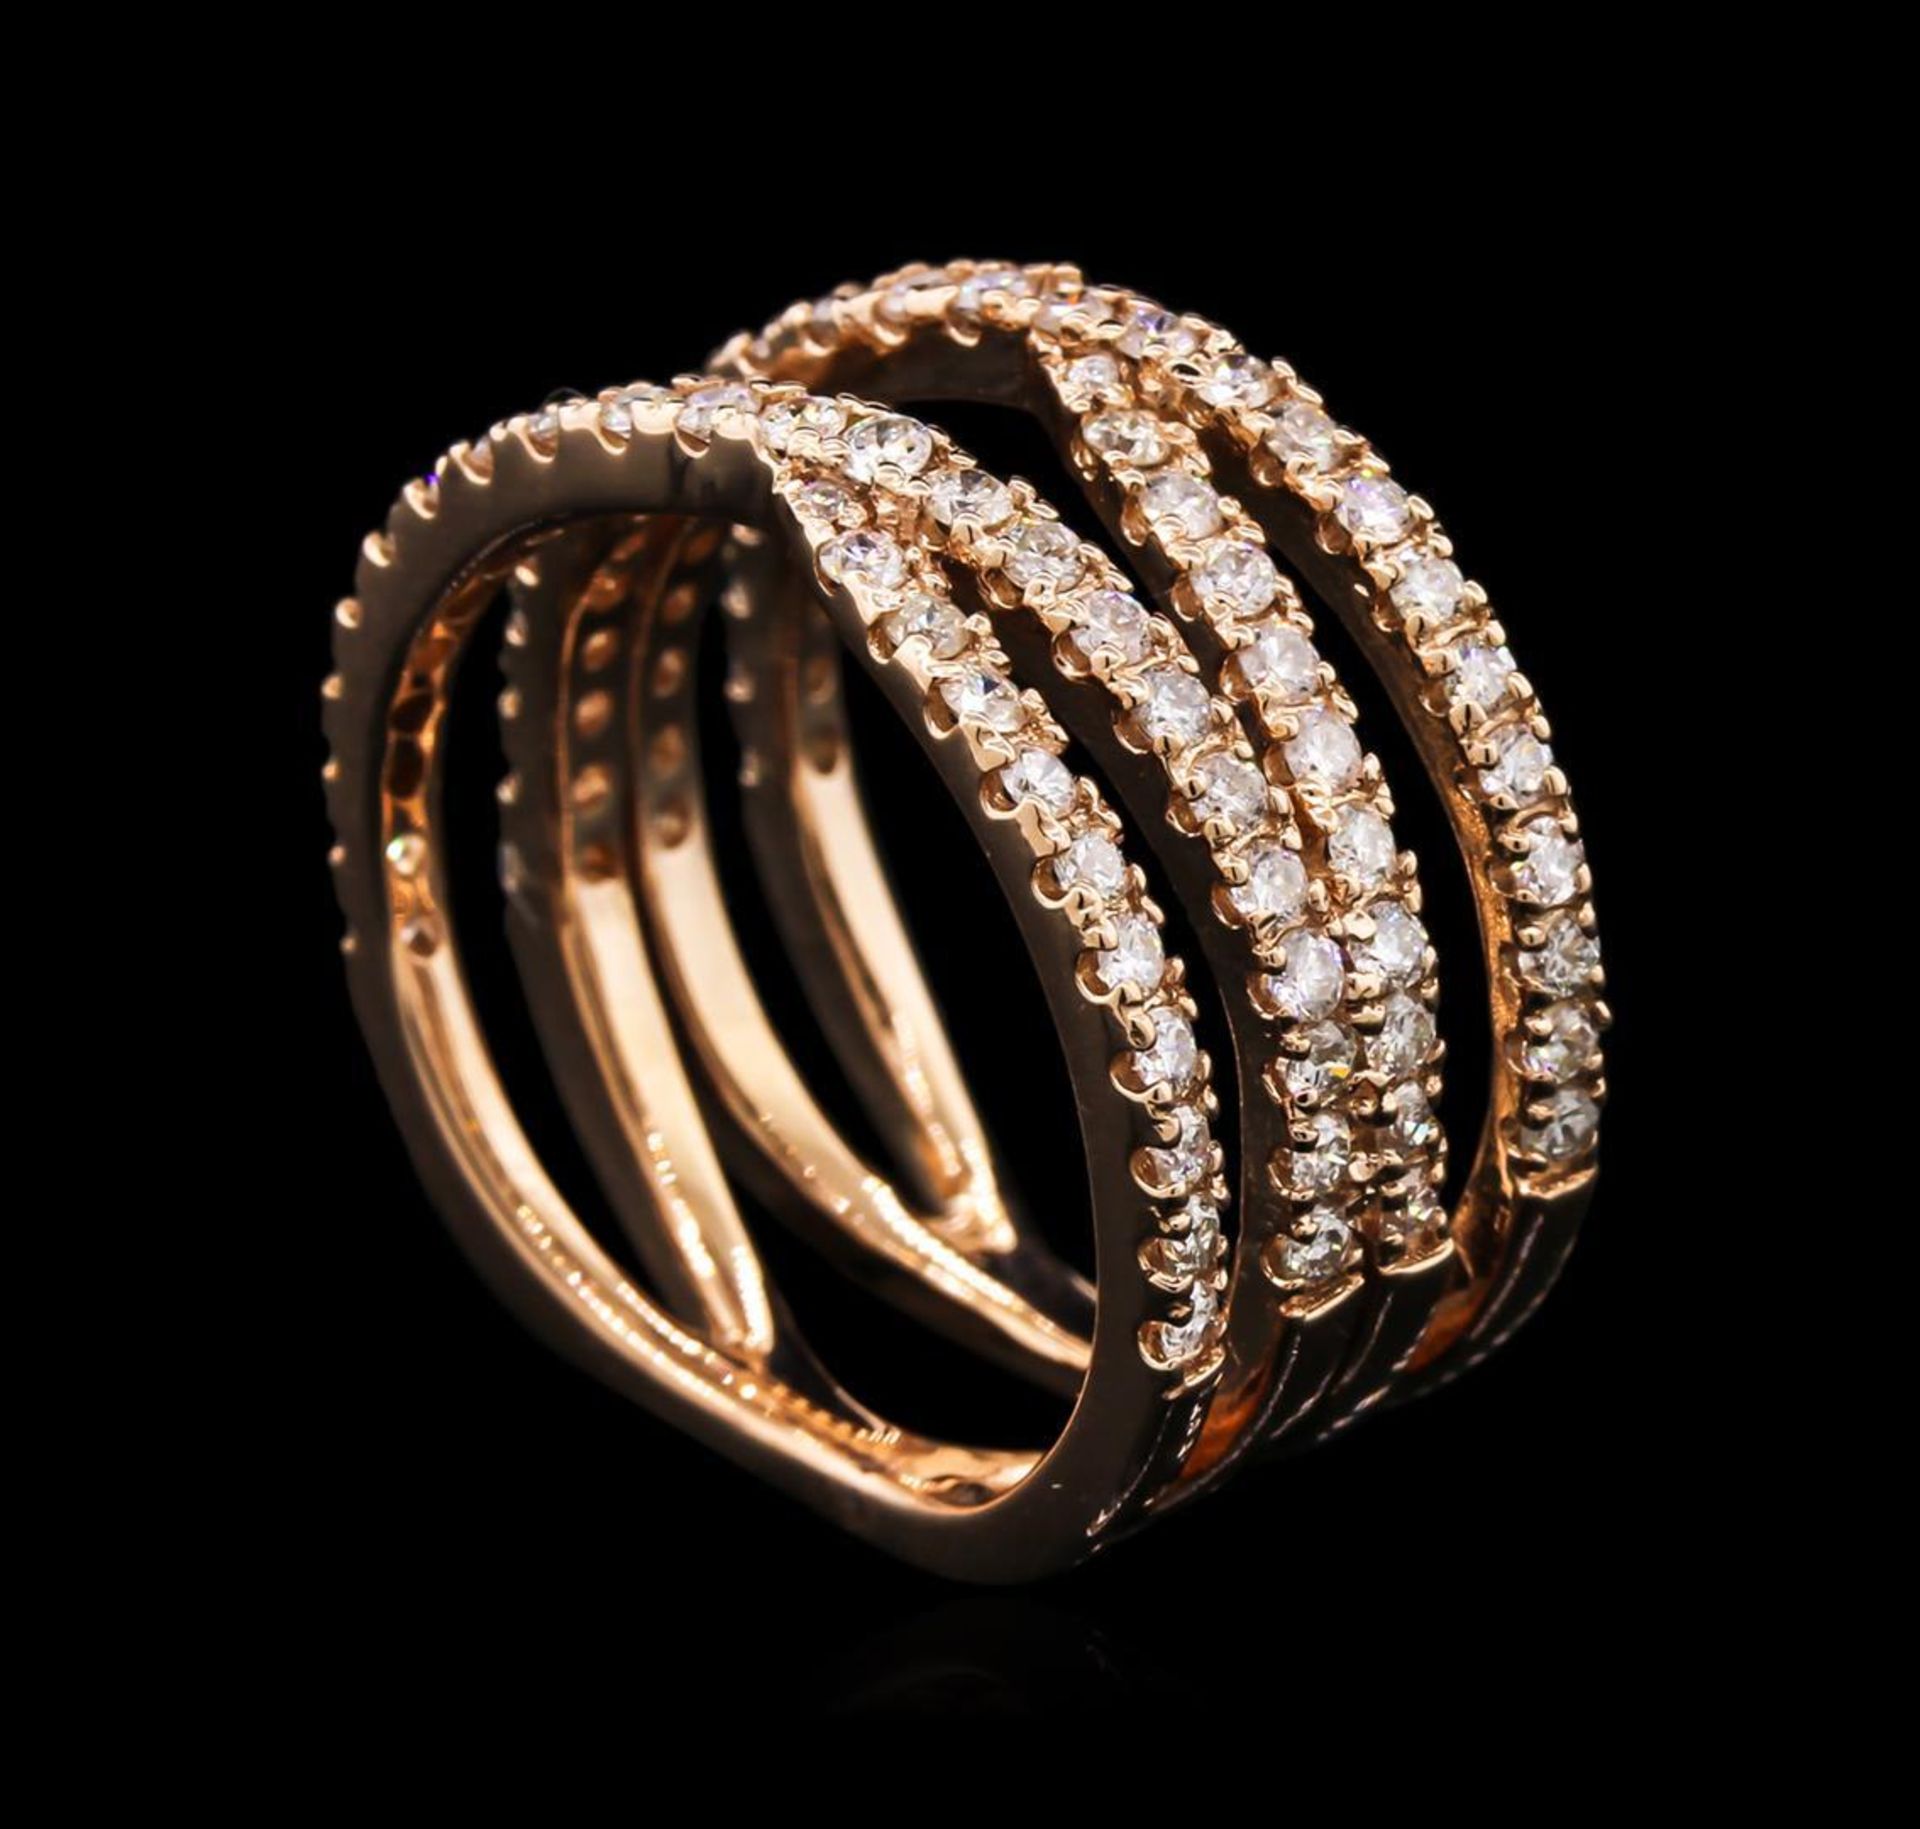 1.20 ctw Diamond Ring - 14KT Rose Gold - Image 2 of 3